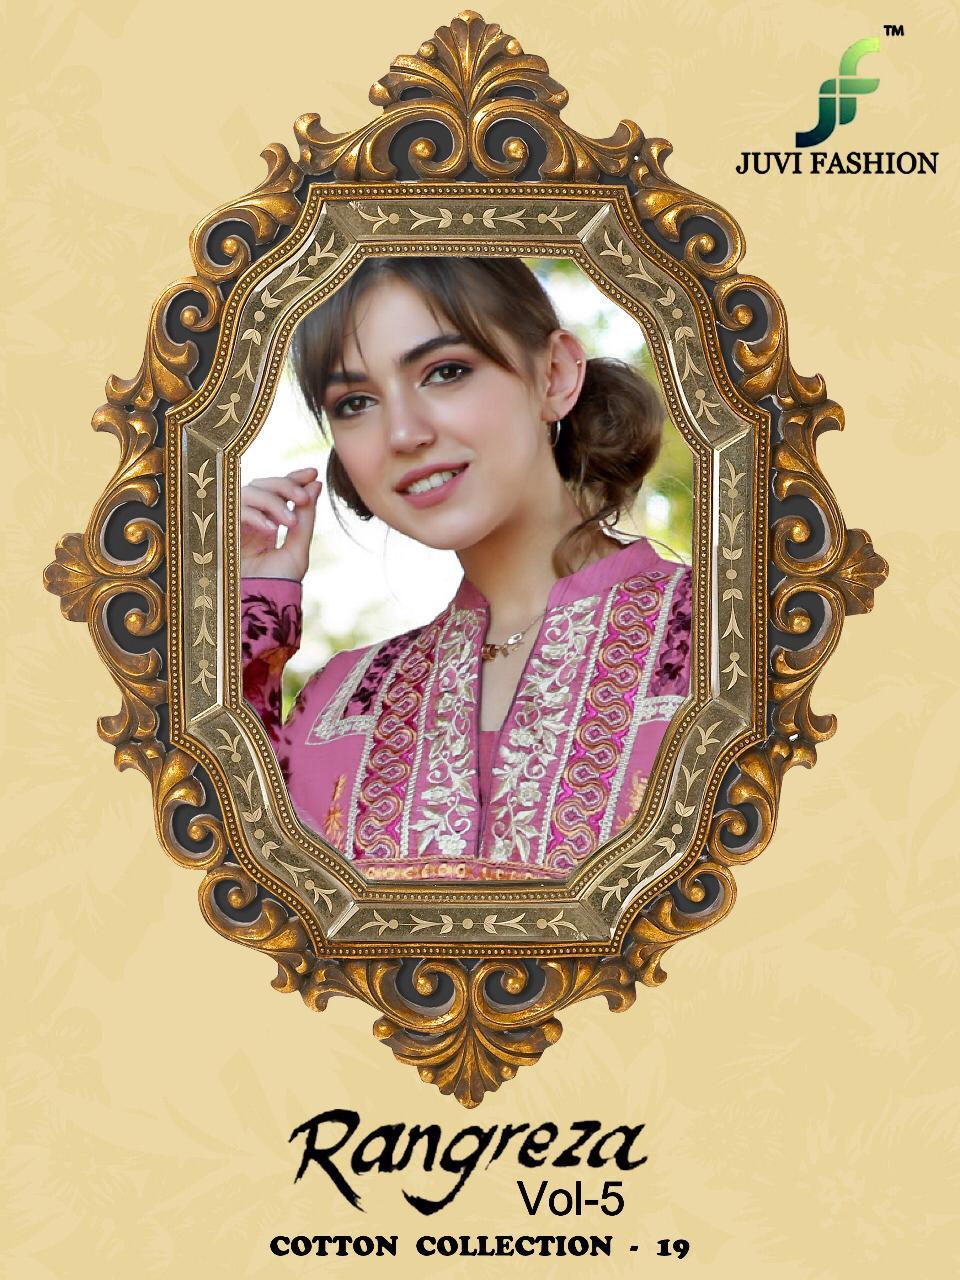 Juvi fashion Rangreza Vol 5 Premium cotton collection 19 pakistani suits